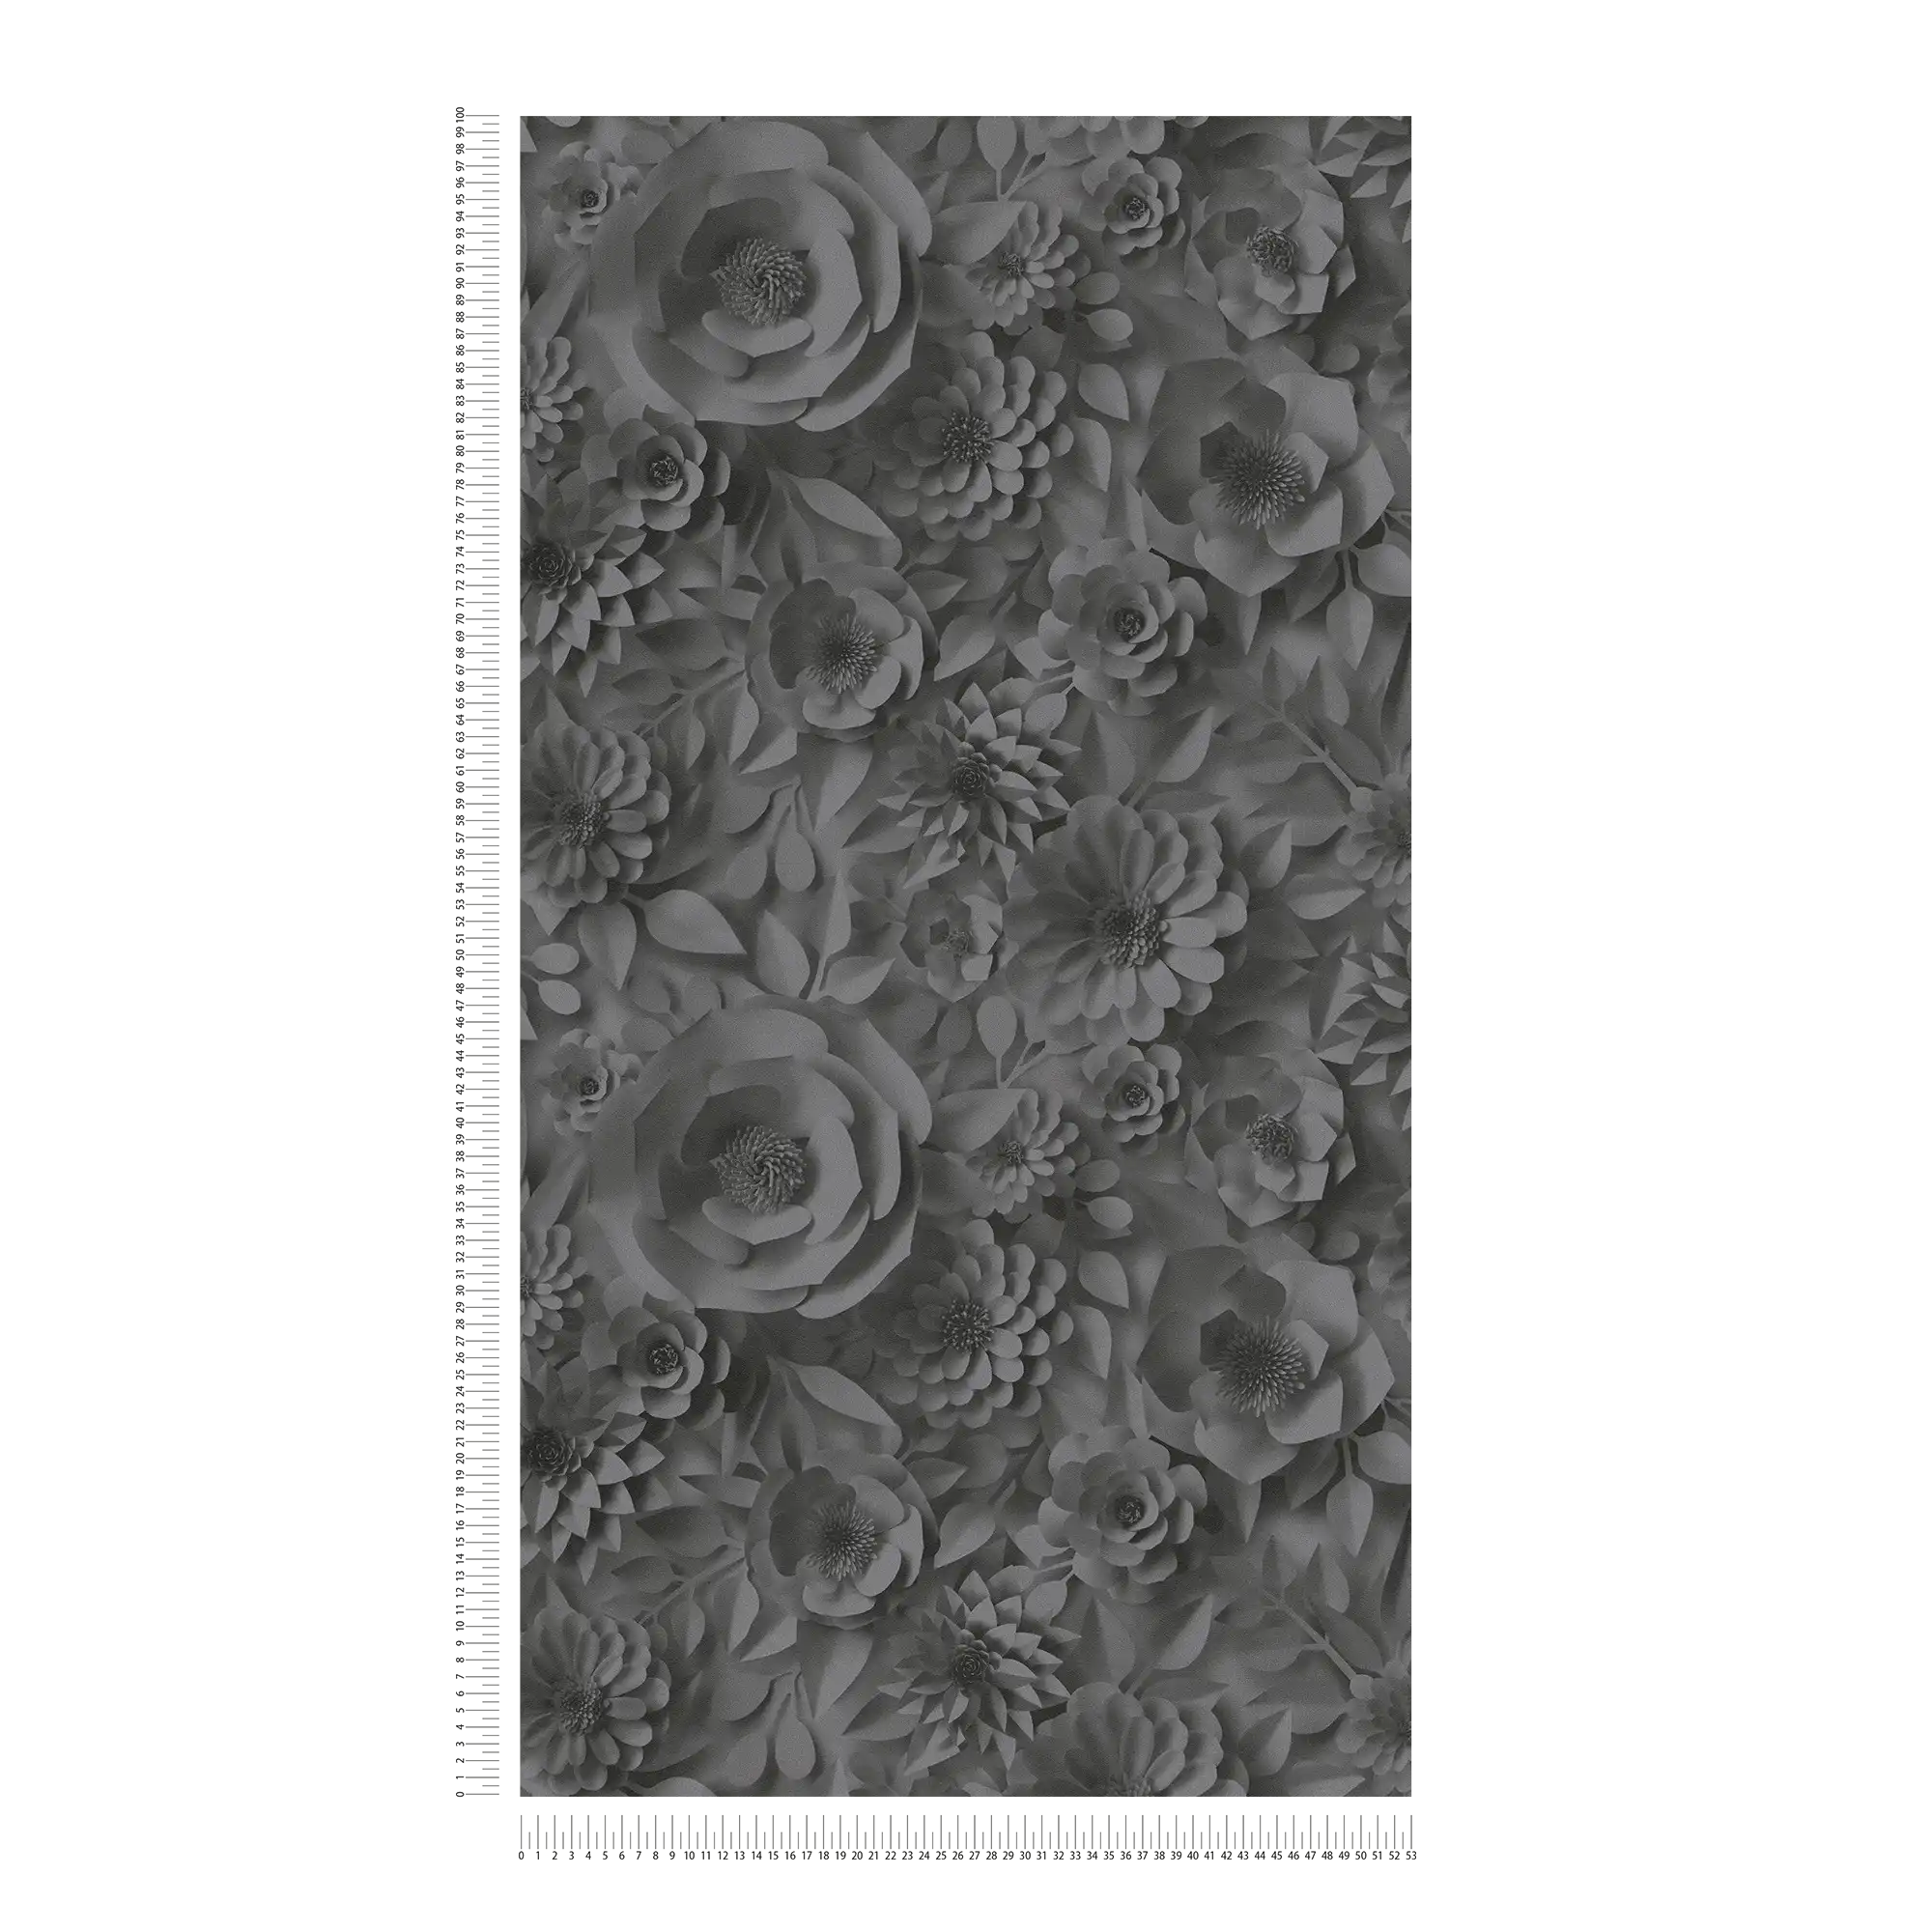             3D wallpaper flowers of paper - grey, black
        